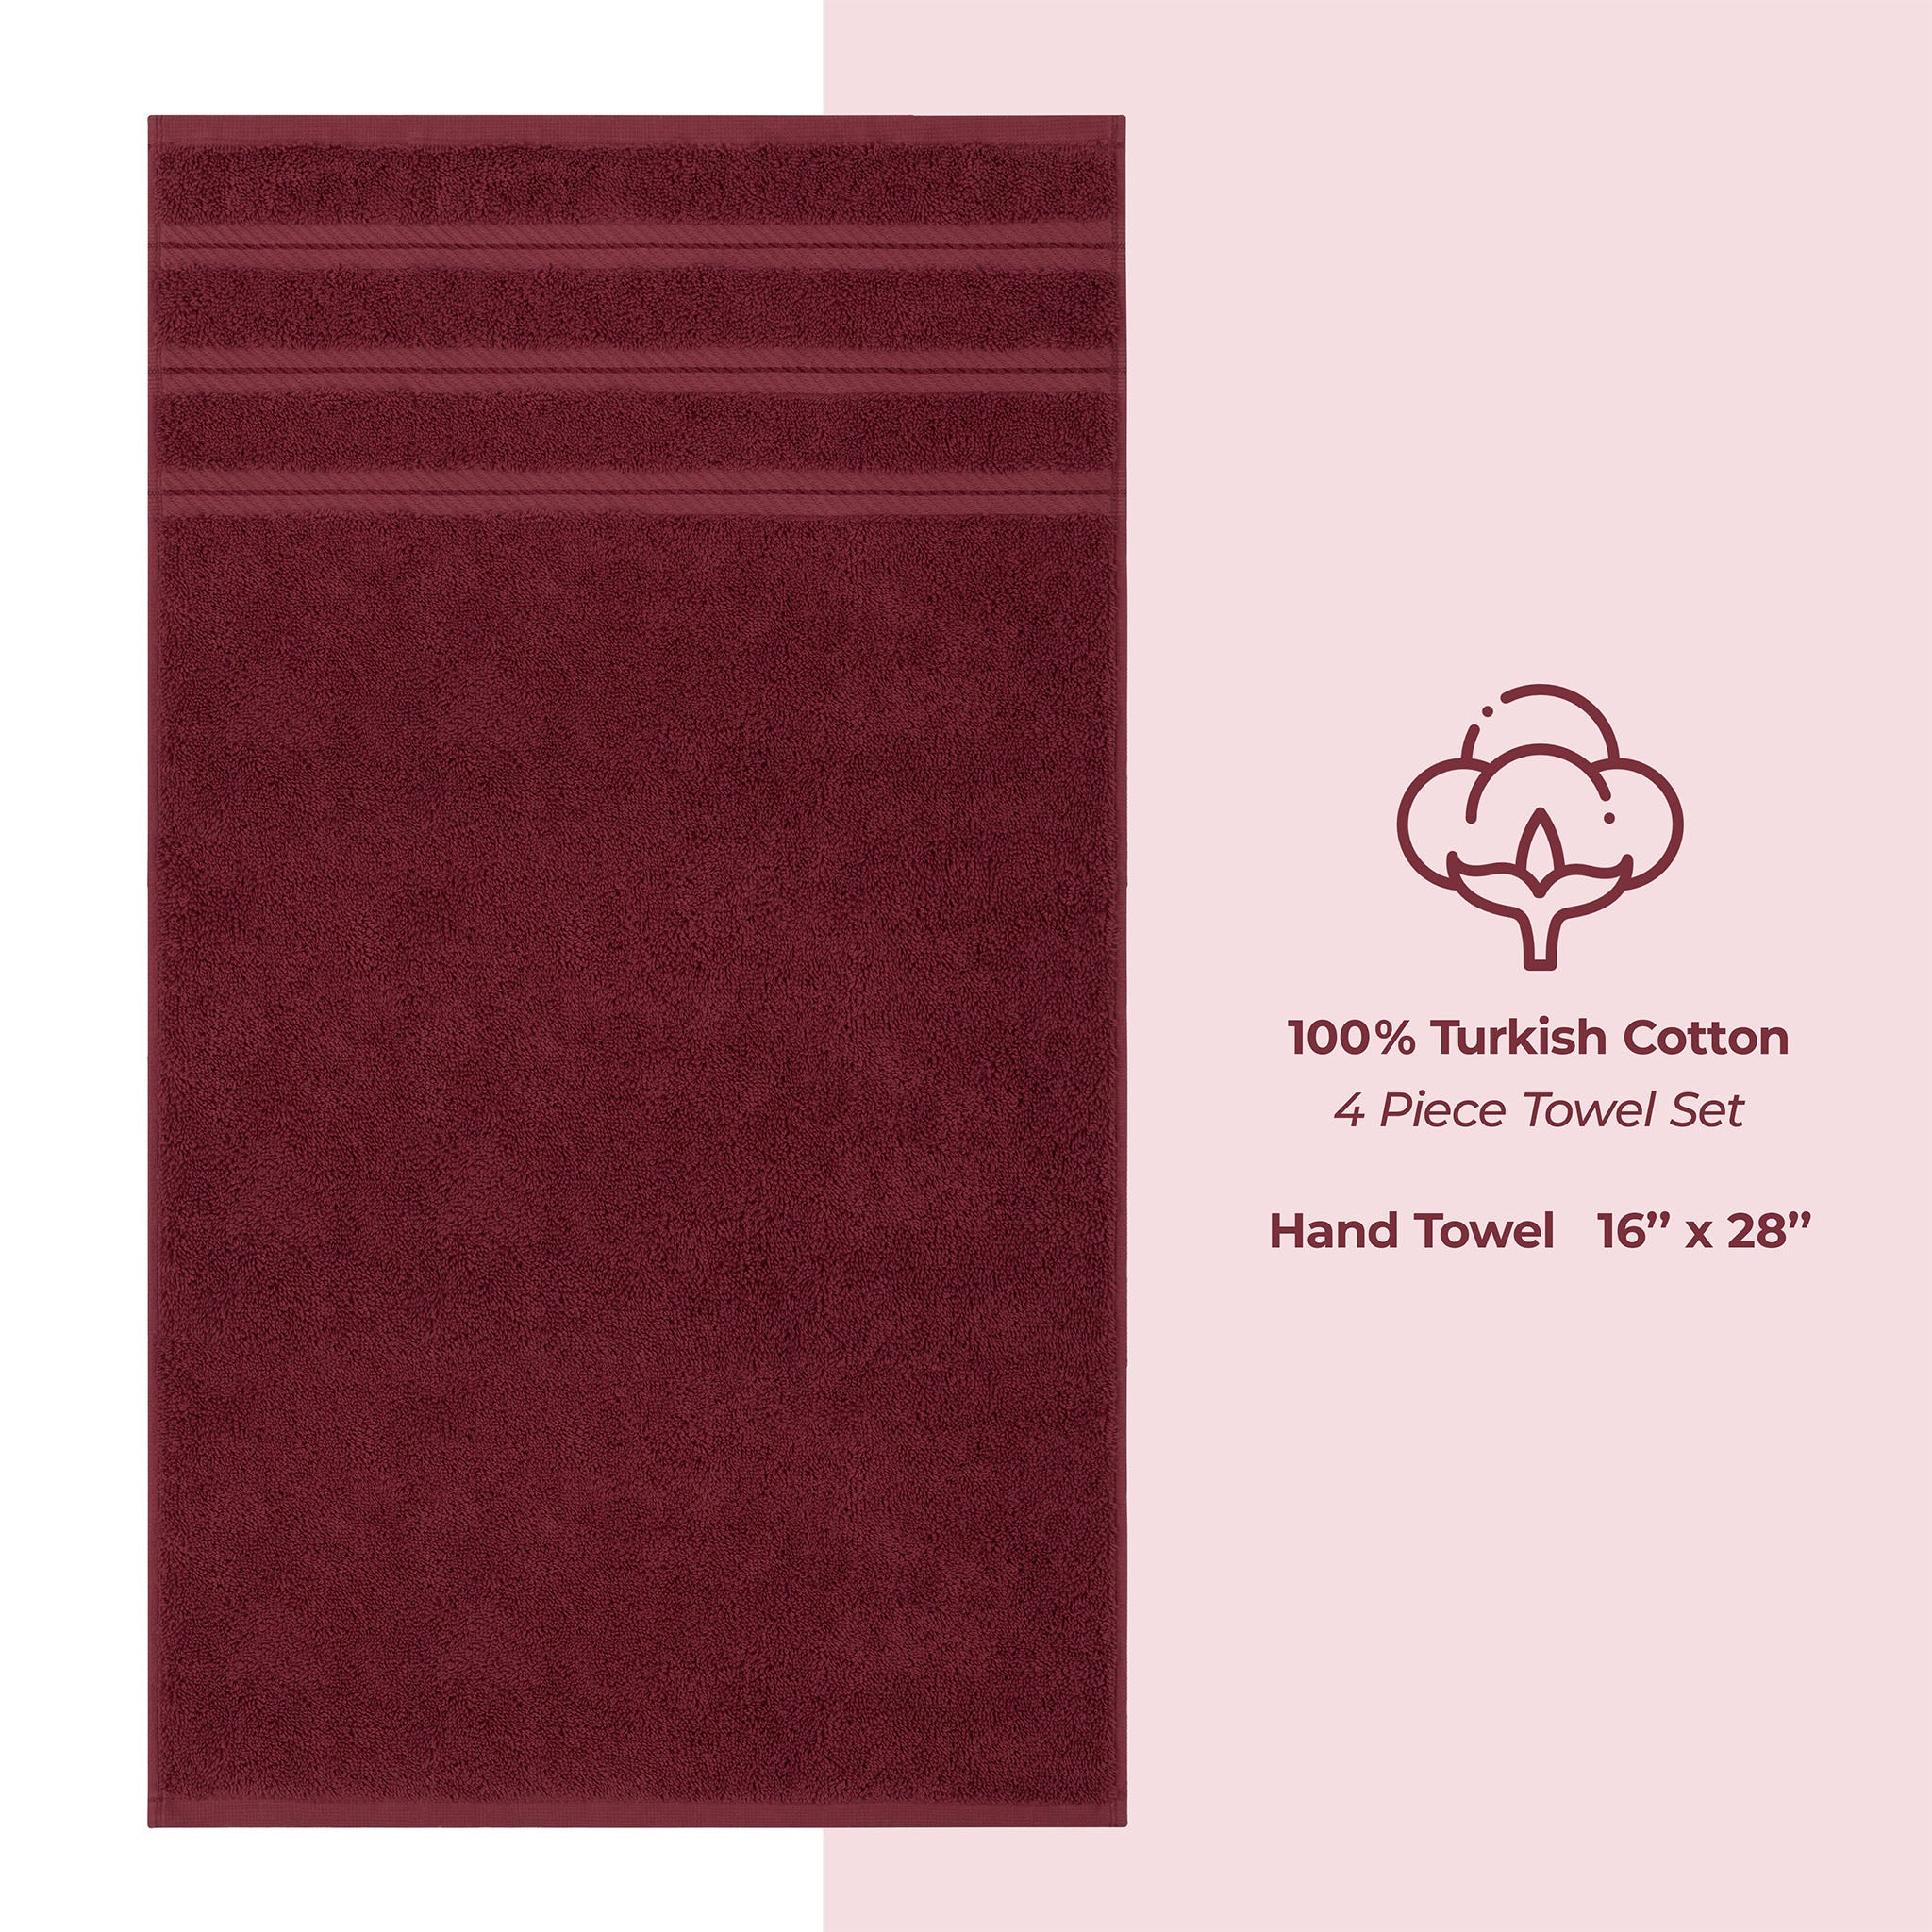  American Soft Linen 100% Turkish Cotton 4 Pack Hand Towel Set  bordeaux-red-4